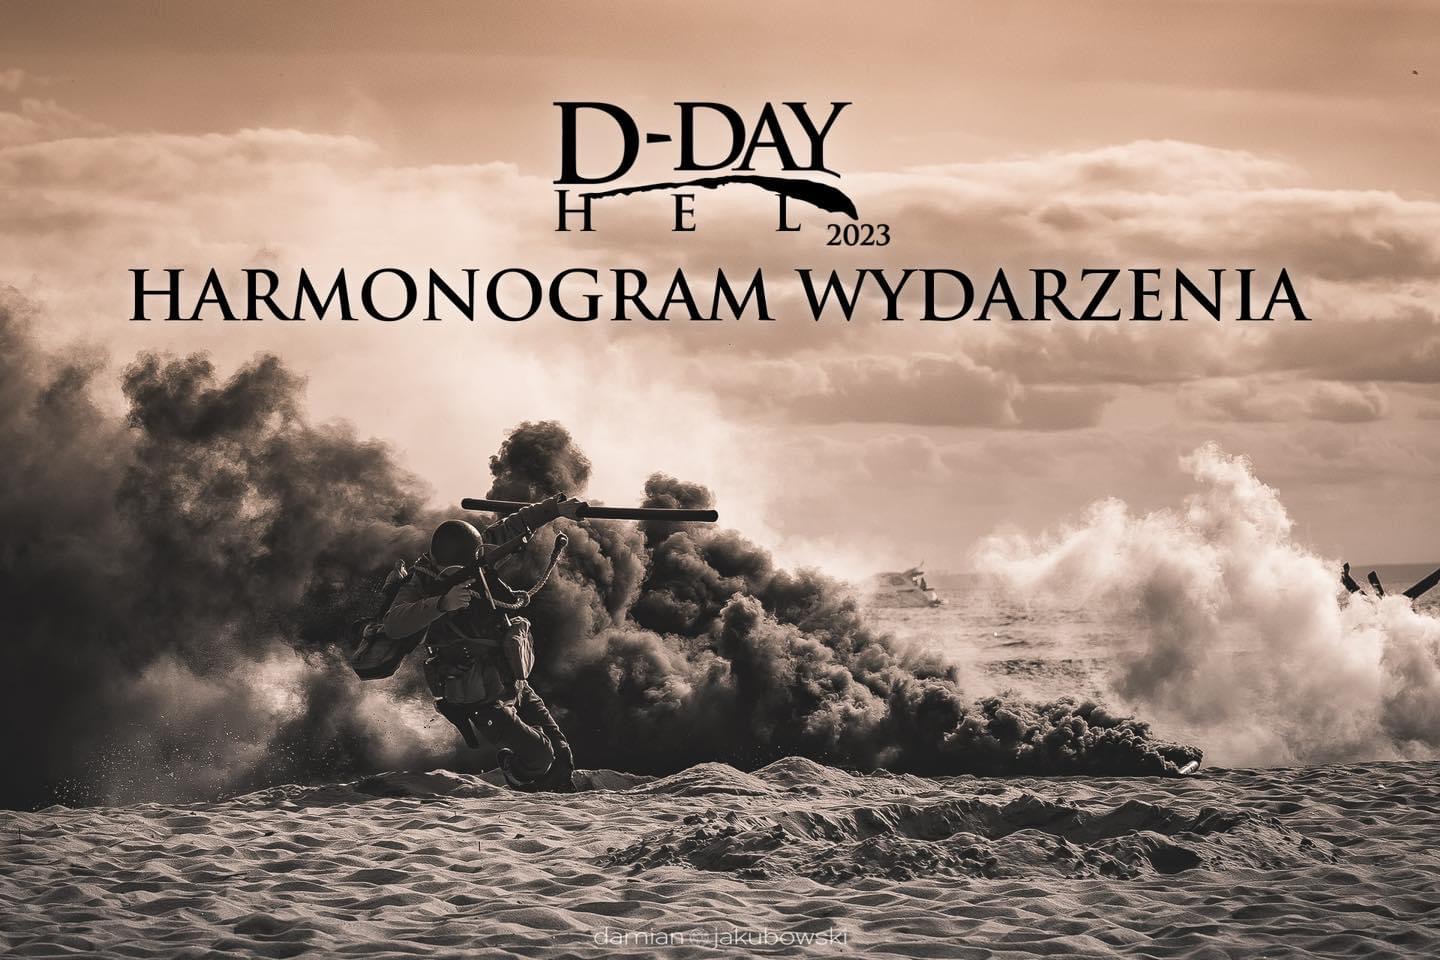 Harmonogram wydarzeń D-Day Hel 2023